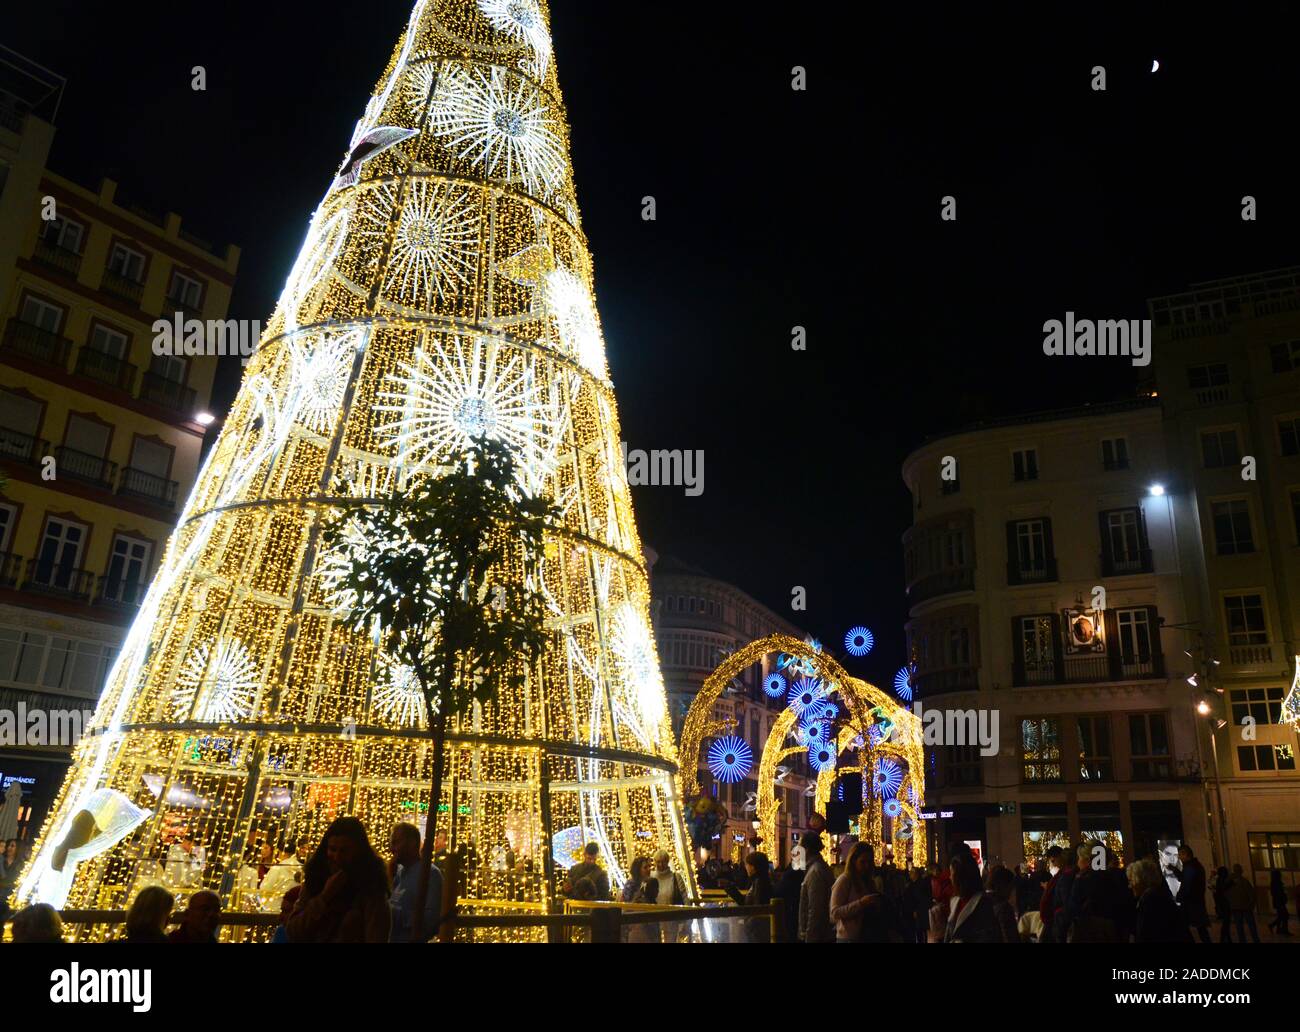 Calle Larios, la rue principale de Malaga, Espagne, durant les fêtes de Noël 2019 Banque D'Images